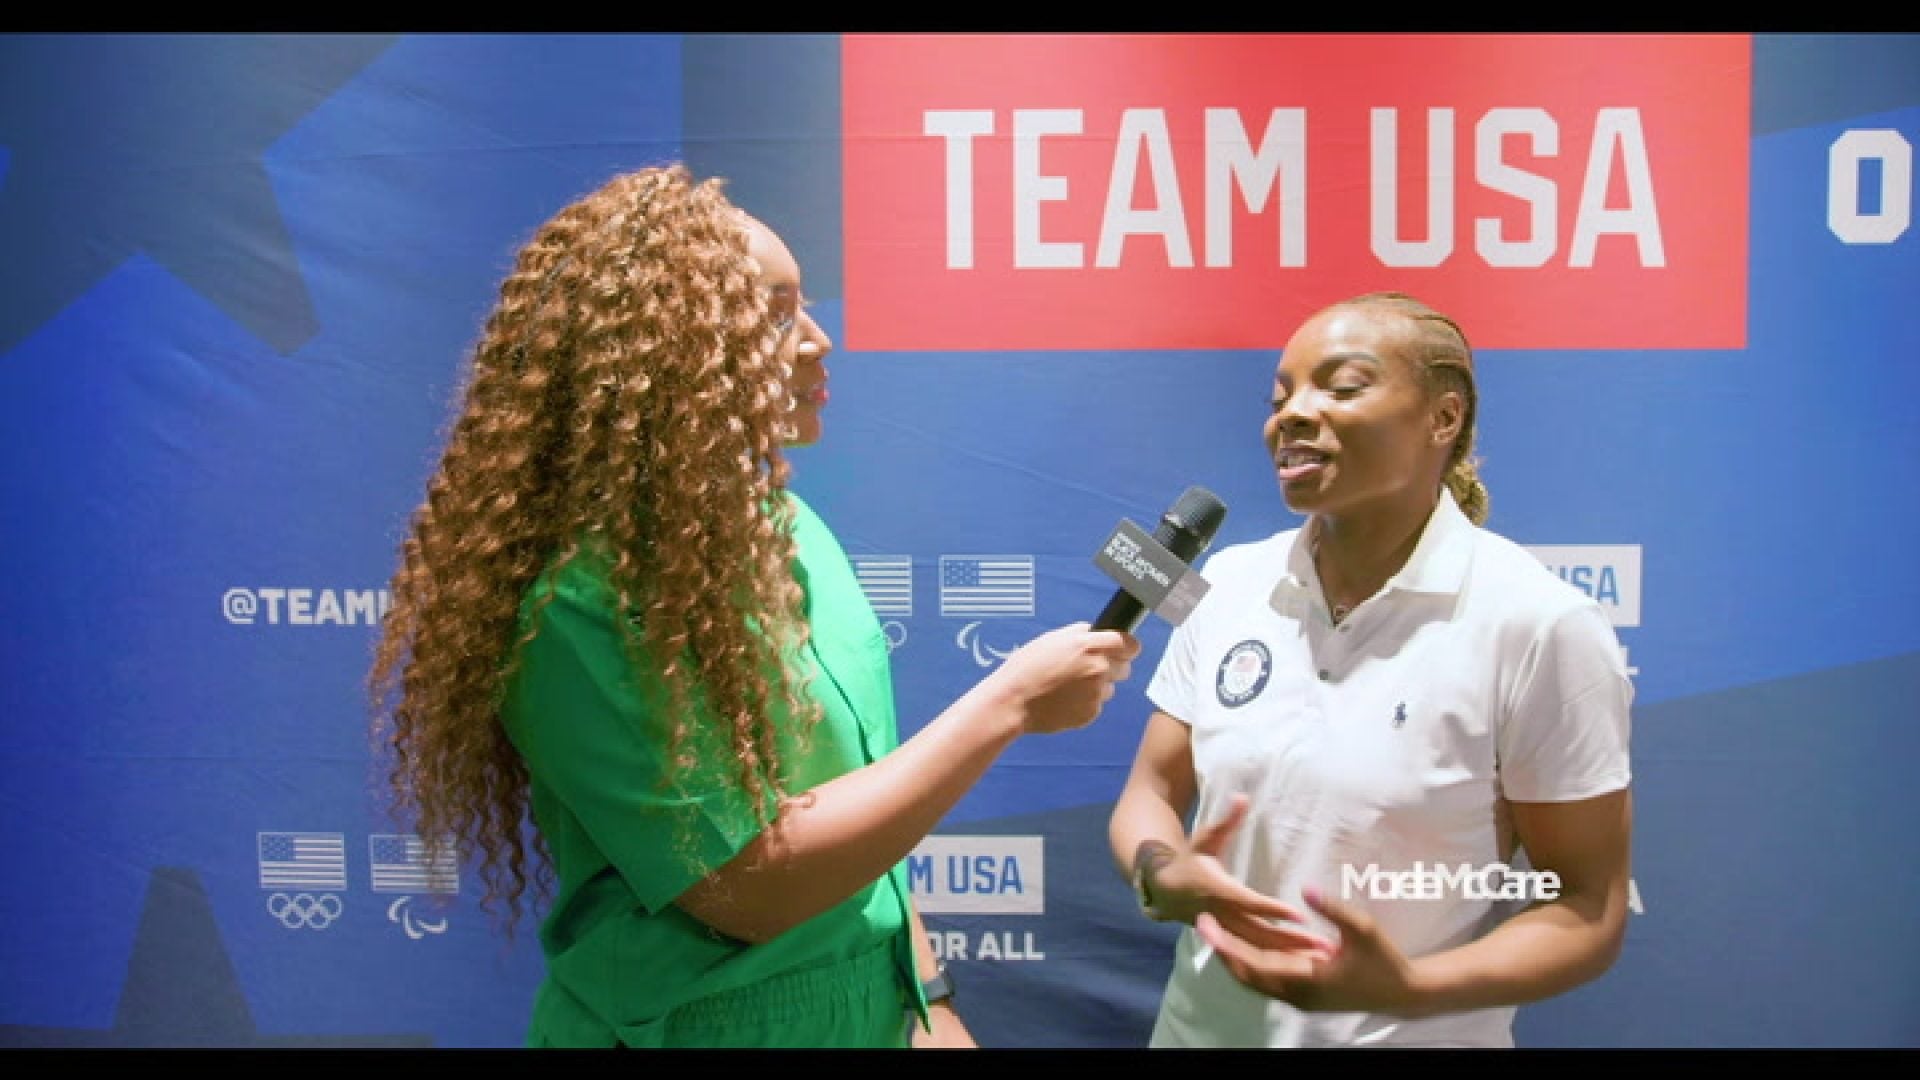 WATCH: ESSENCE Black Women In Sports Takes Over Team USA Media Summit